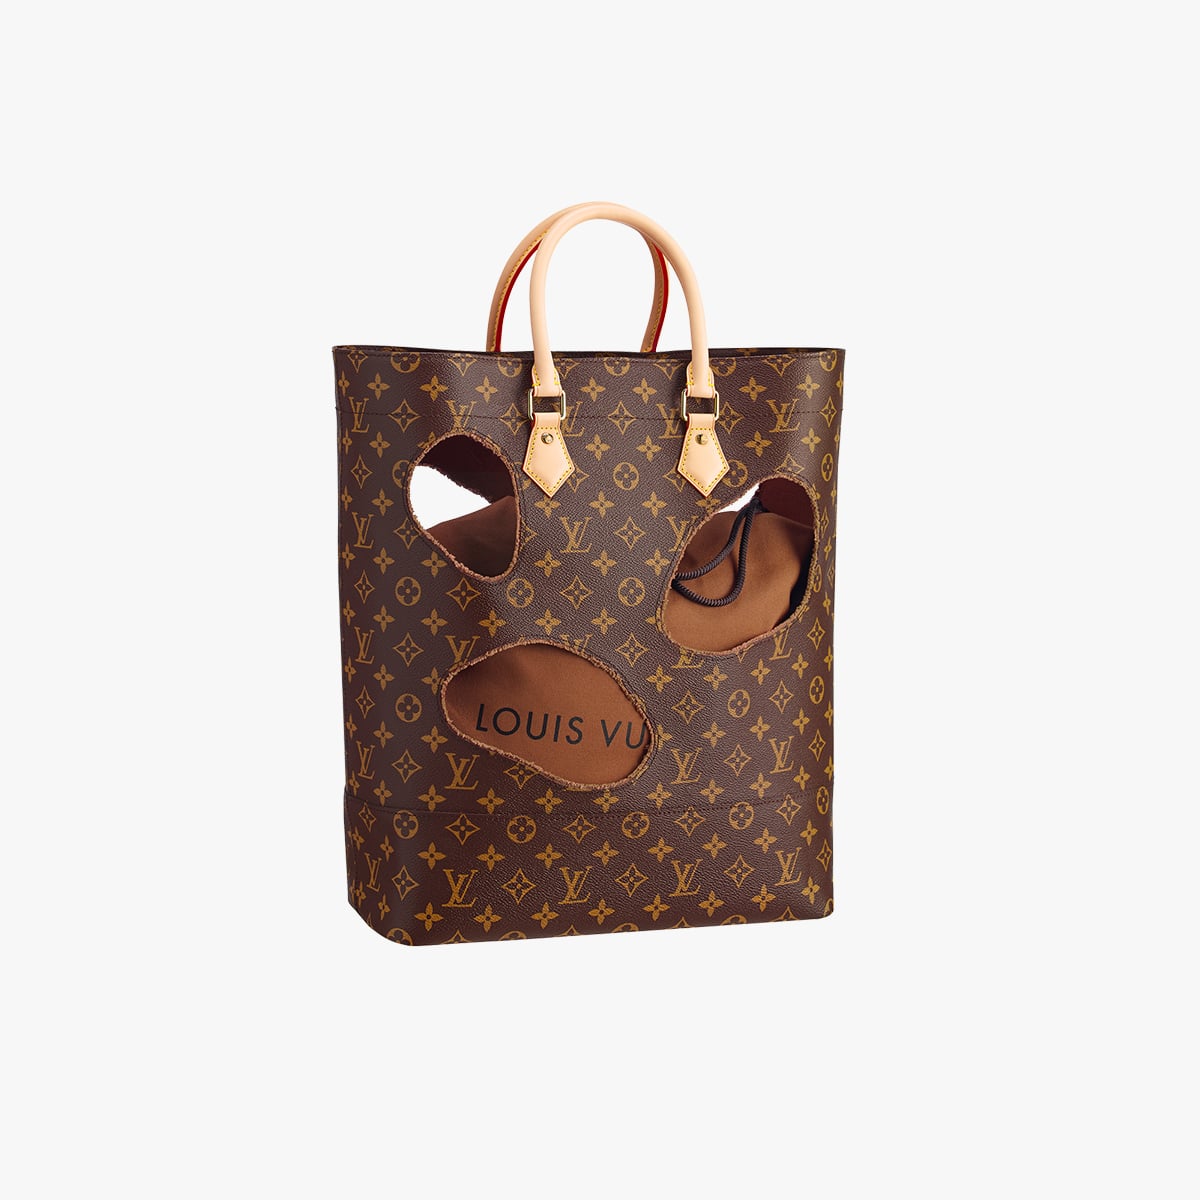 Louis Vuitton Bag with Holes by Rei Kawakubo